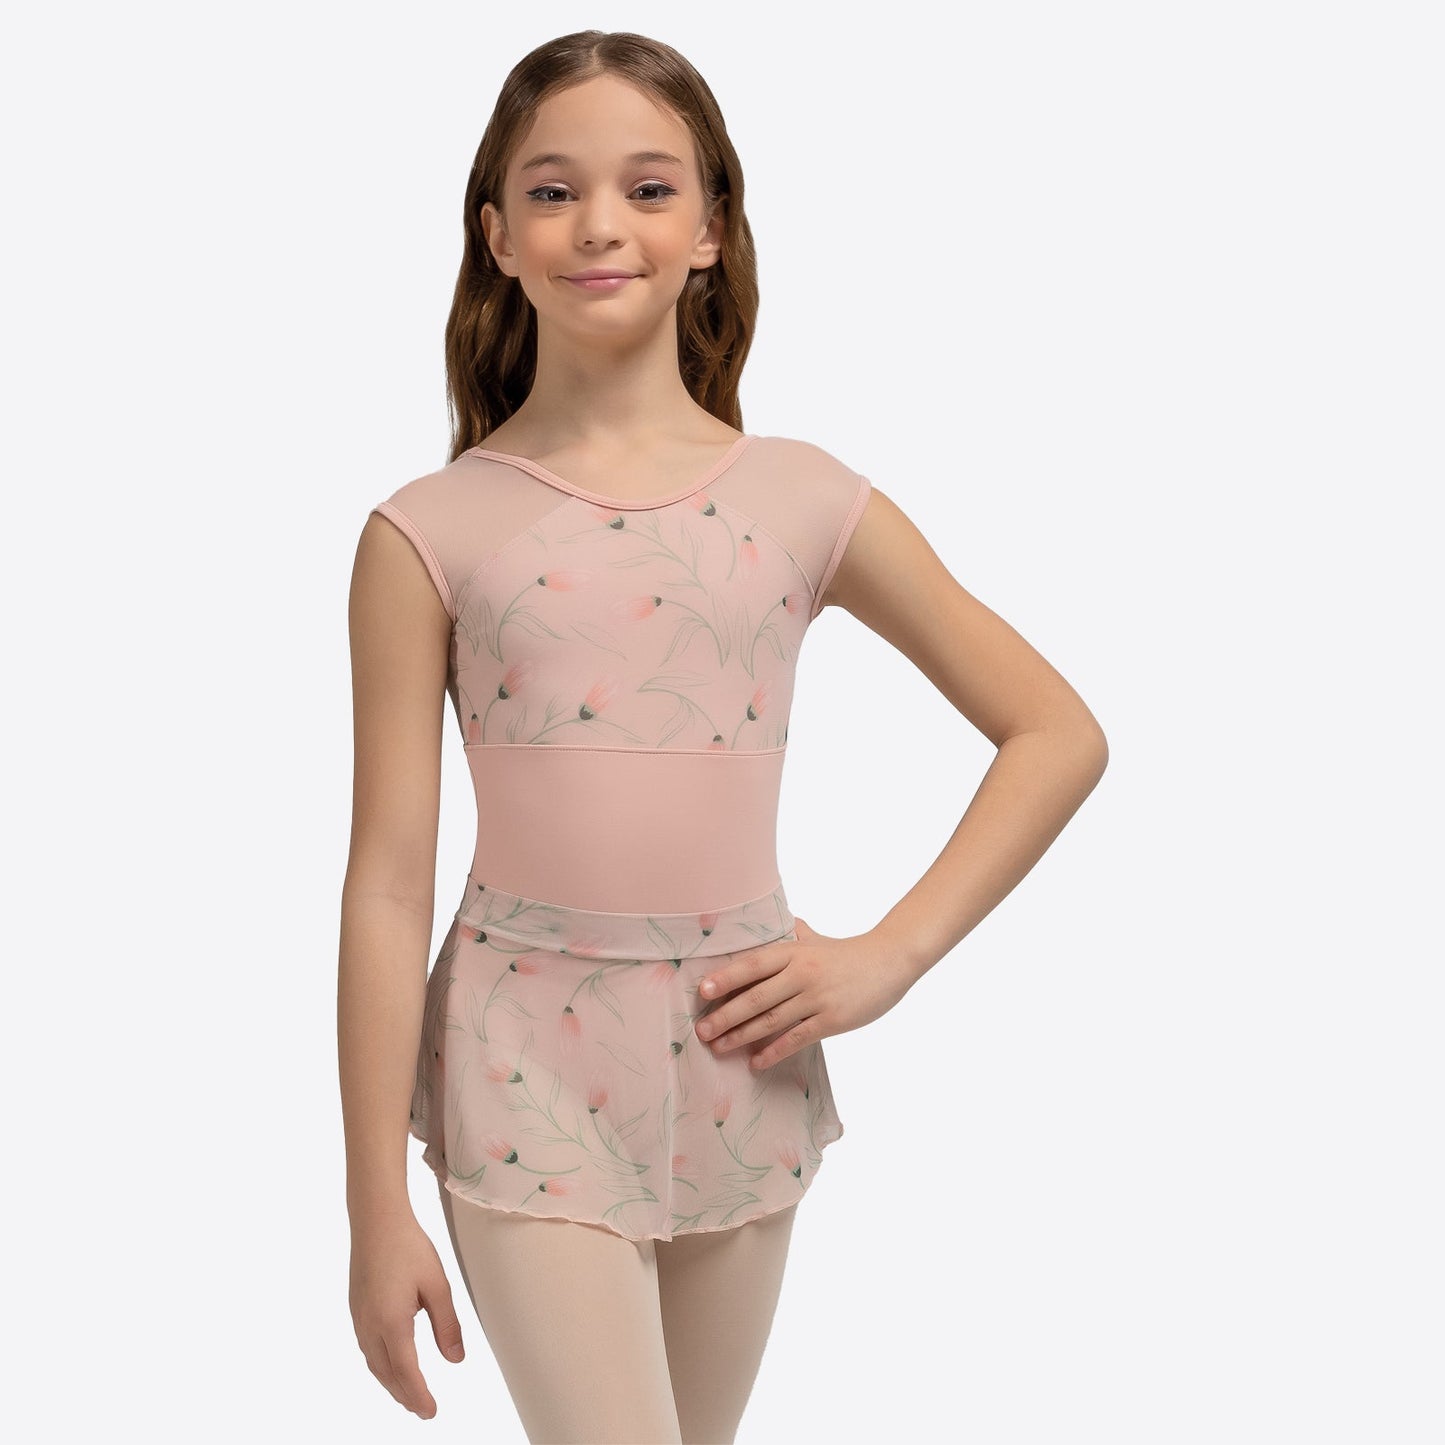 Lupica Kid's Skirt - L-2299